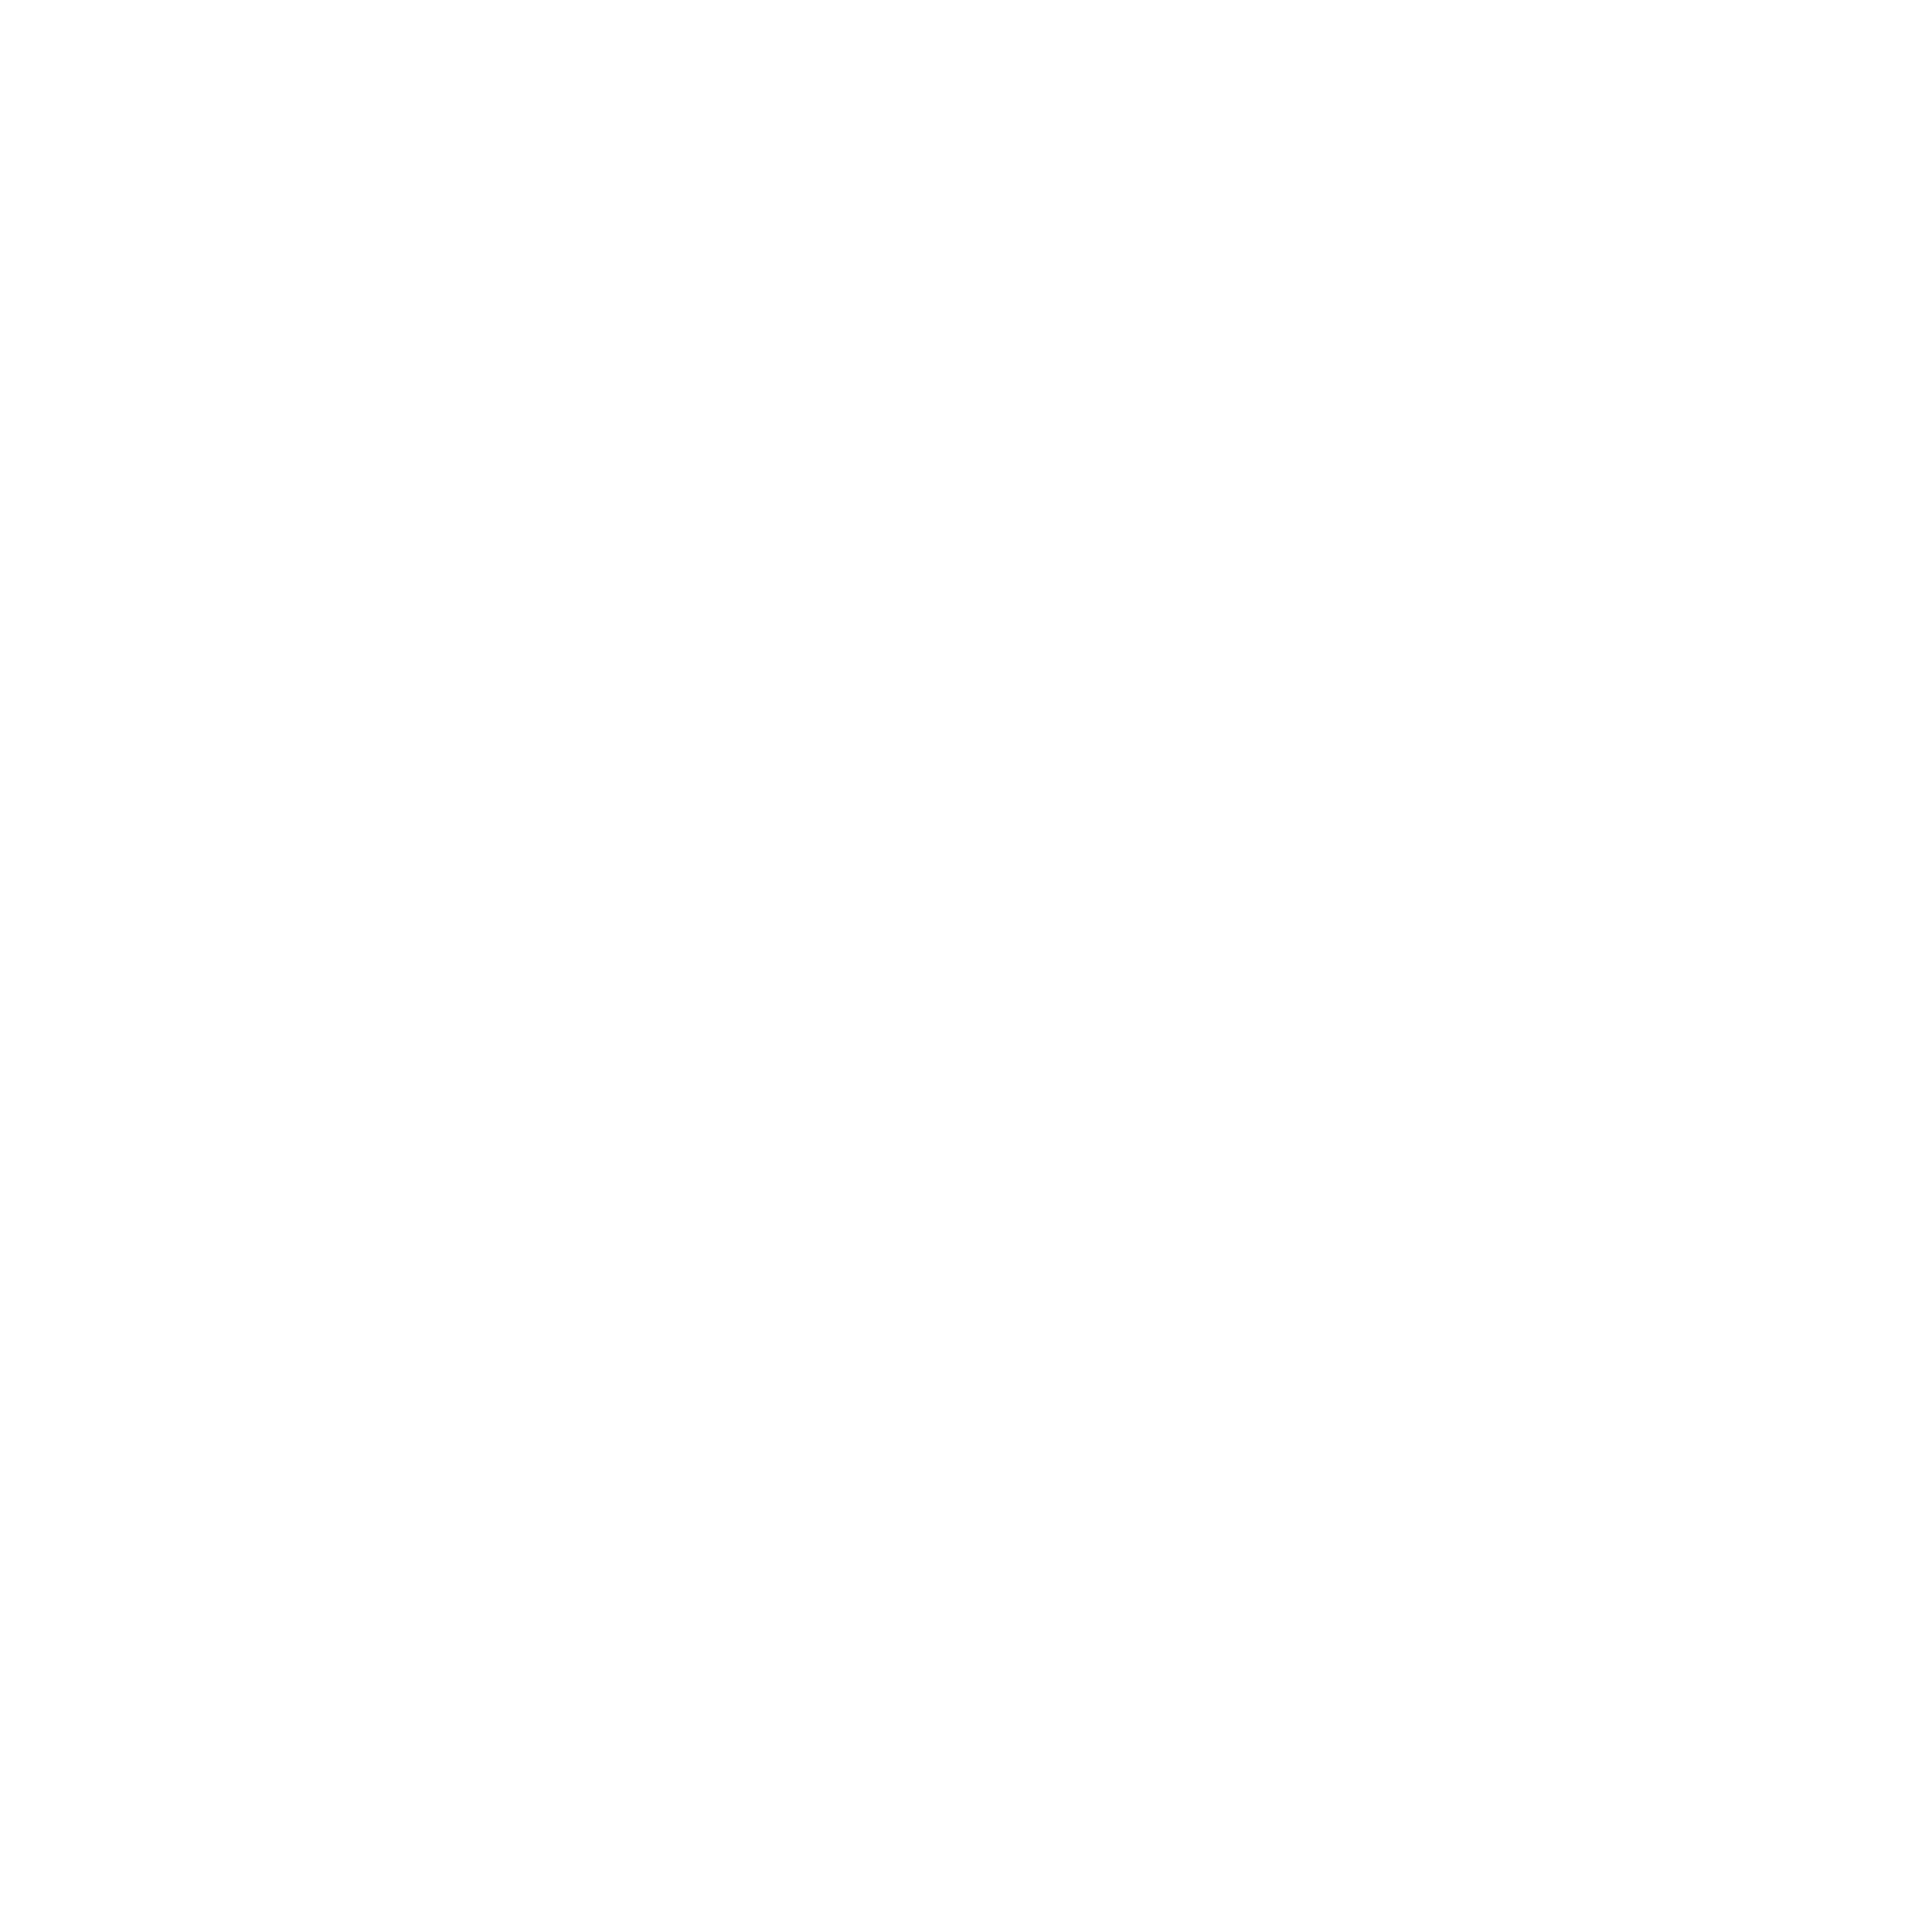 Logo Radio 870 UCR